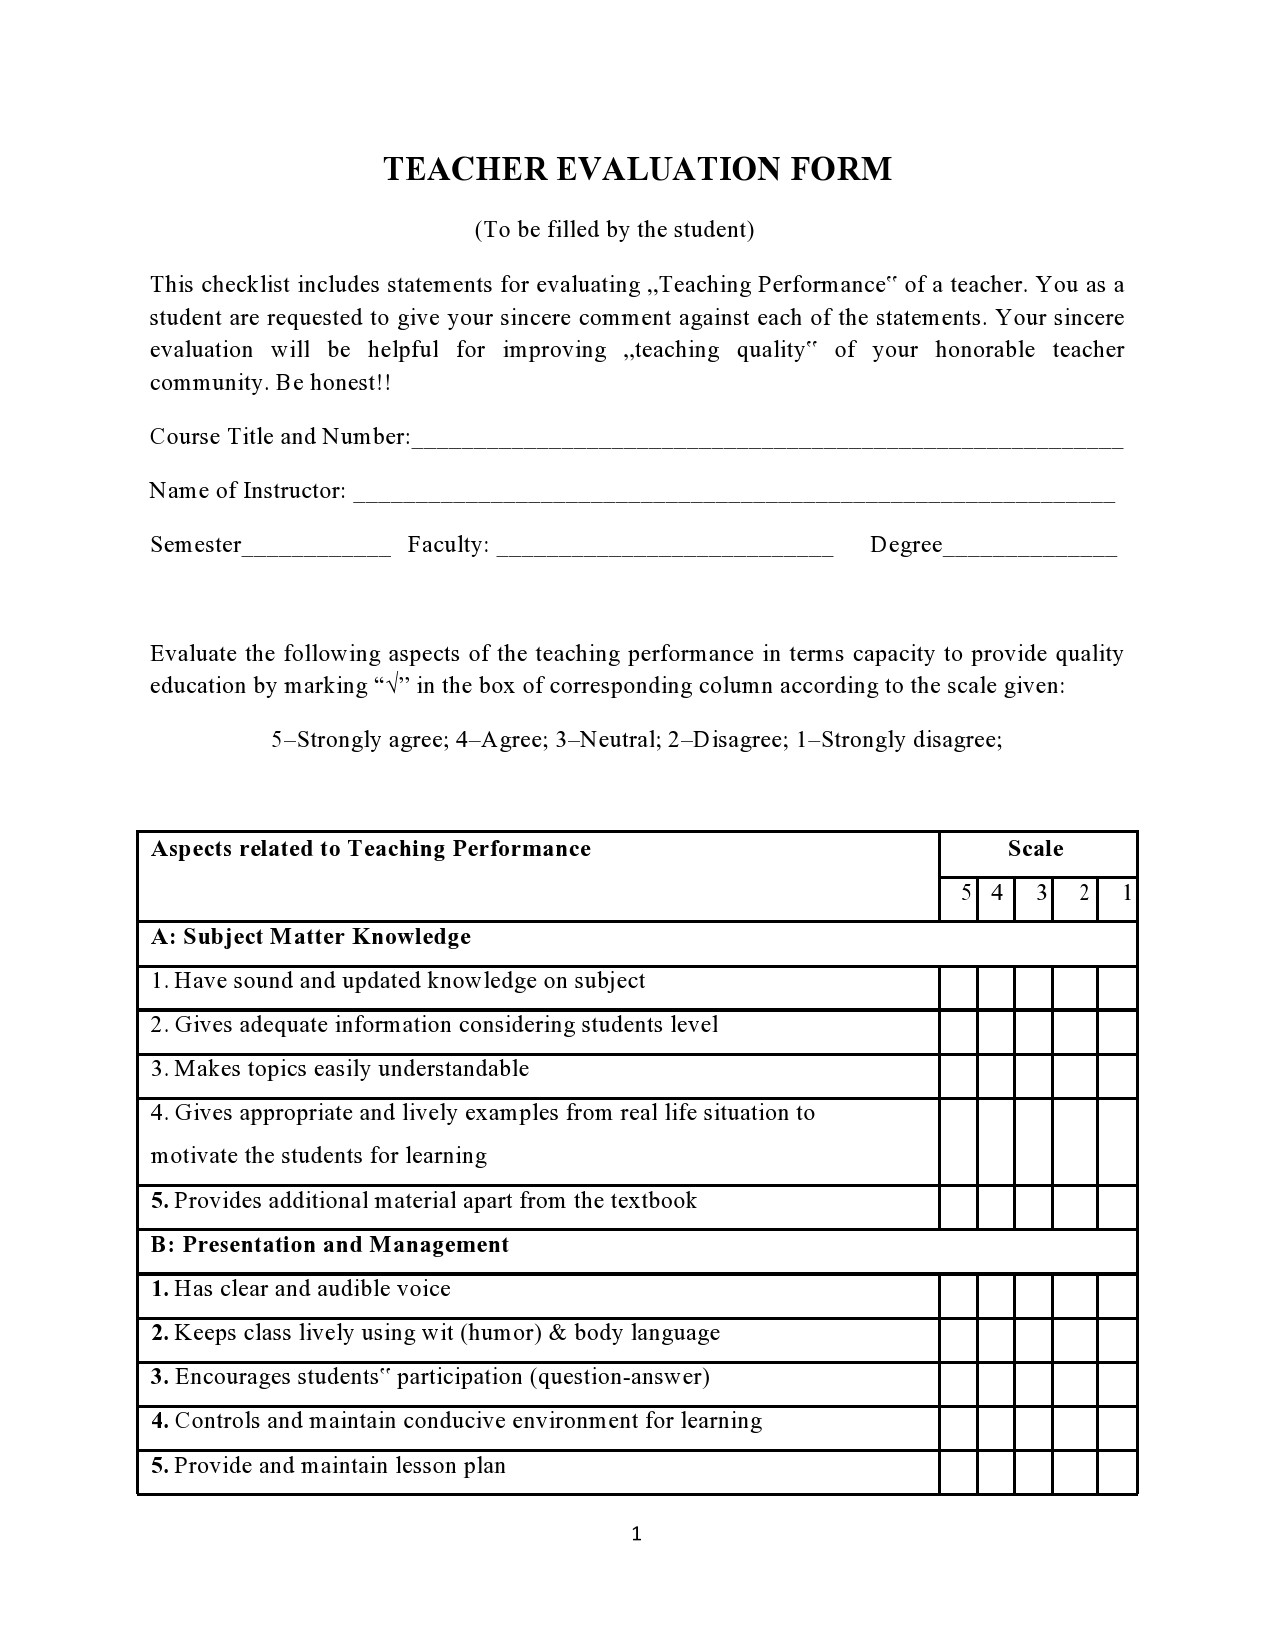 25 Printable Teacher Evaluation Forms [Free] ᐅ TemplateLab